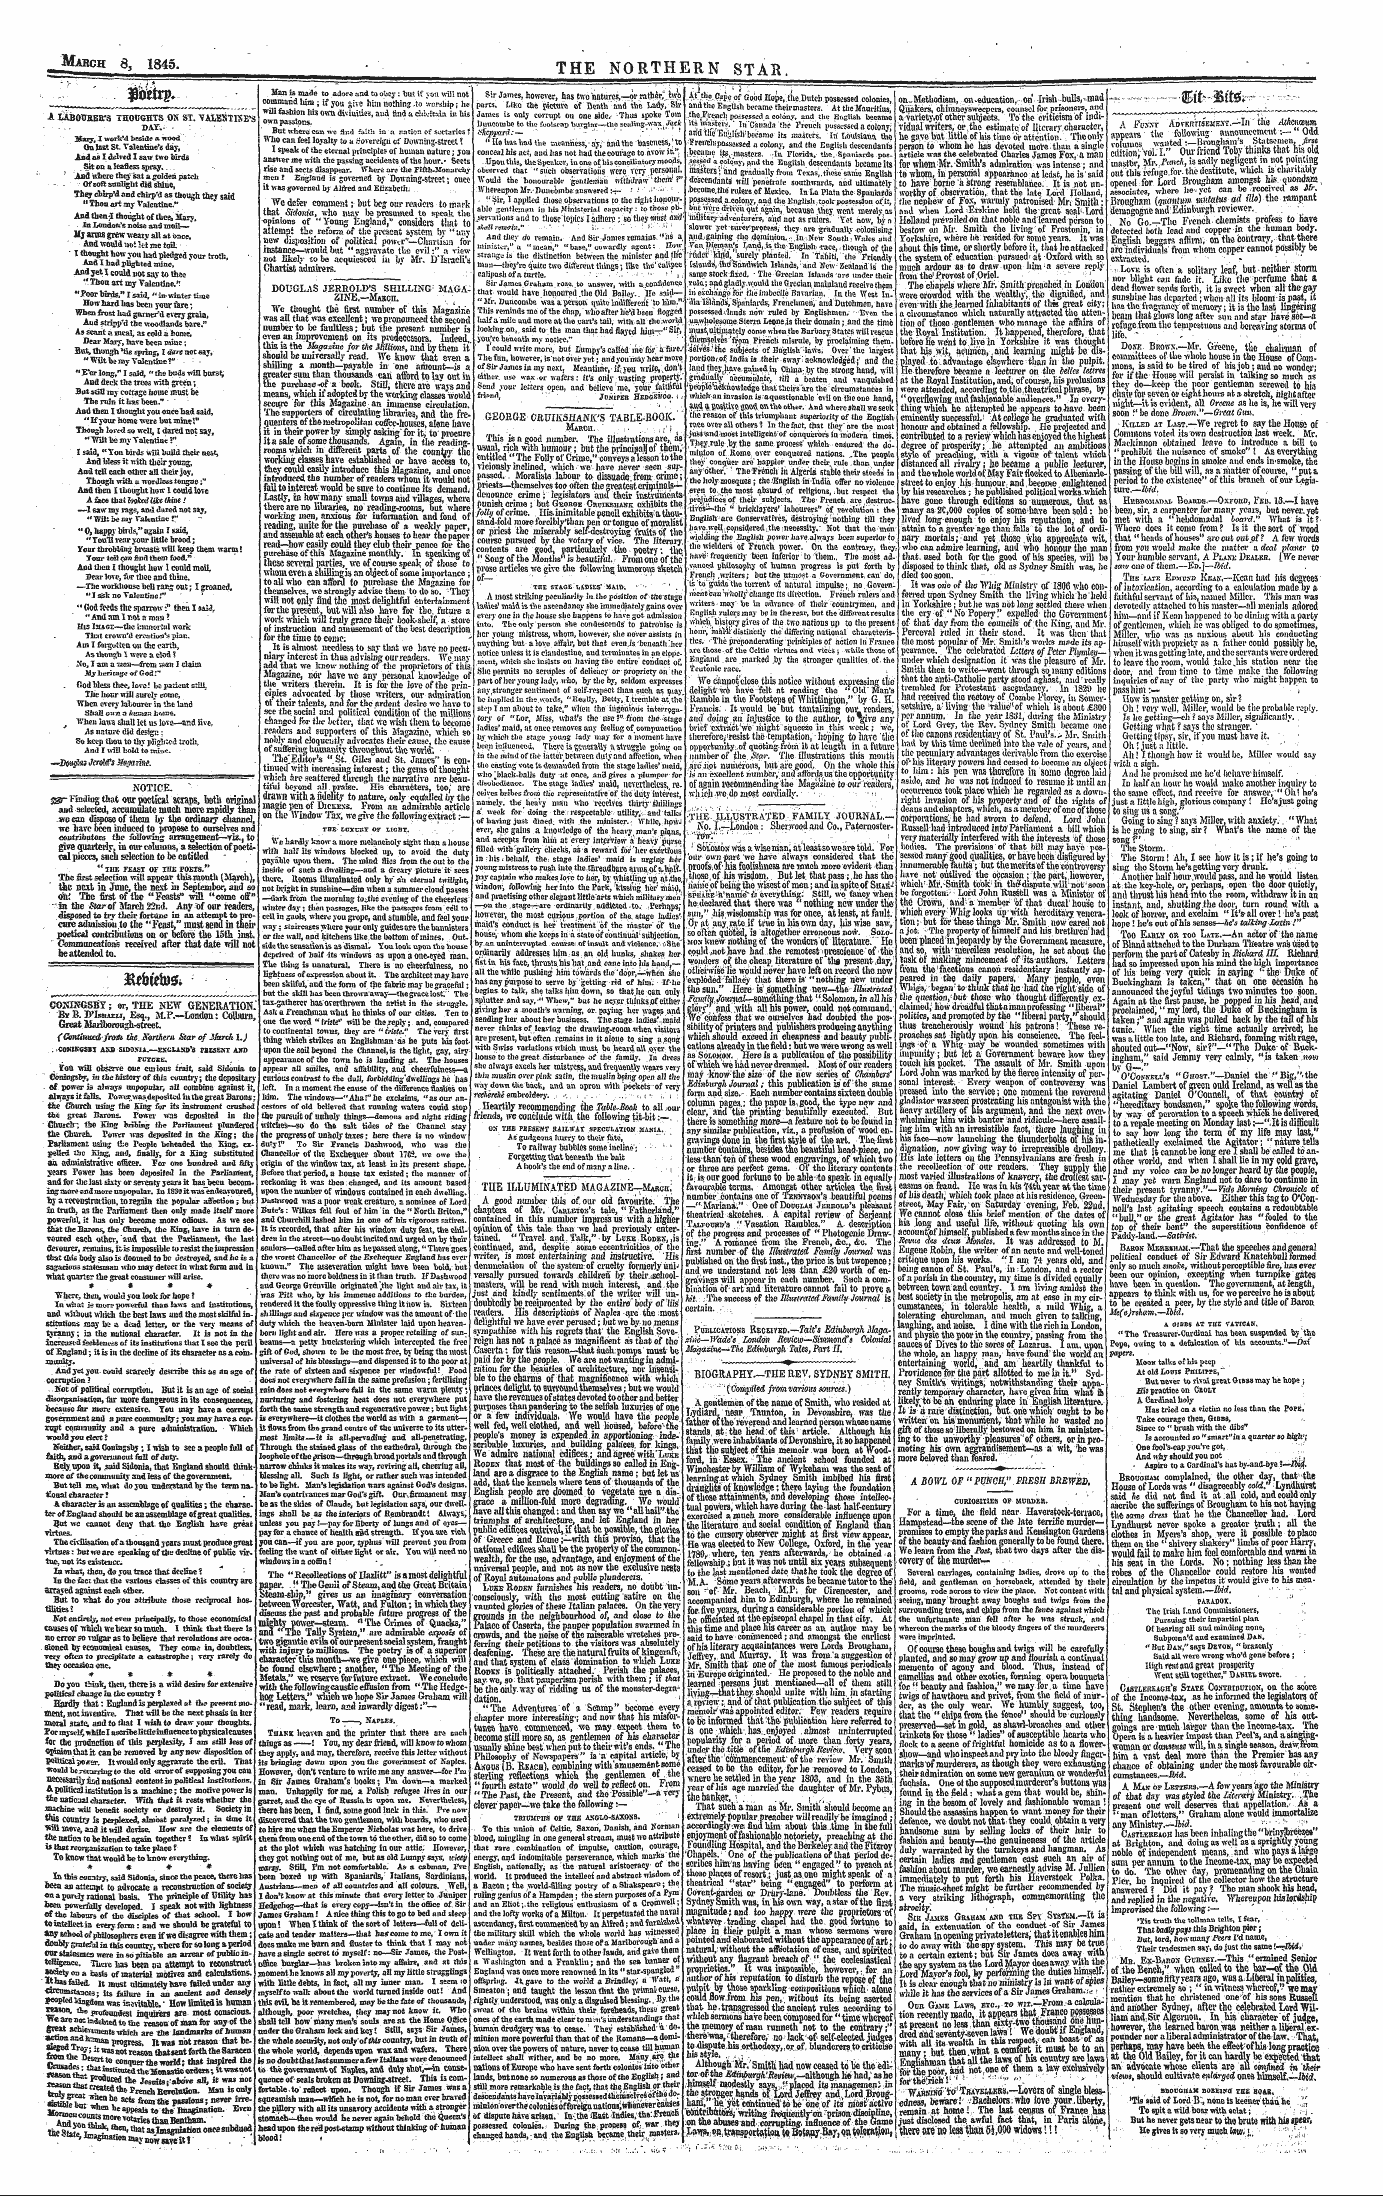 Northern Star (1837-1852): jS F Y, 3rd edition - Publications Recbivbd.—Tait's Edinburgh ...